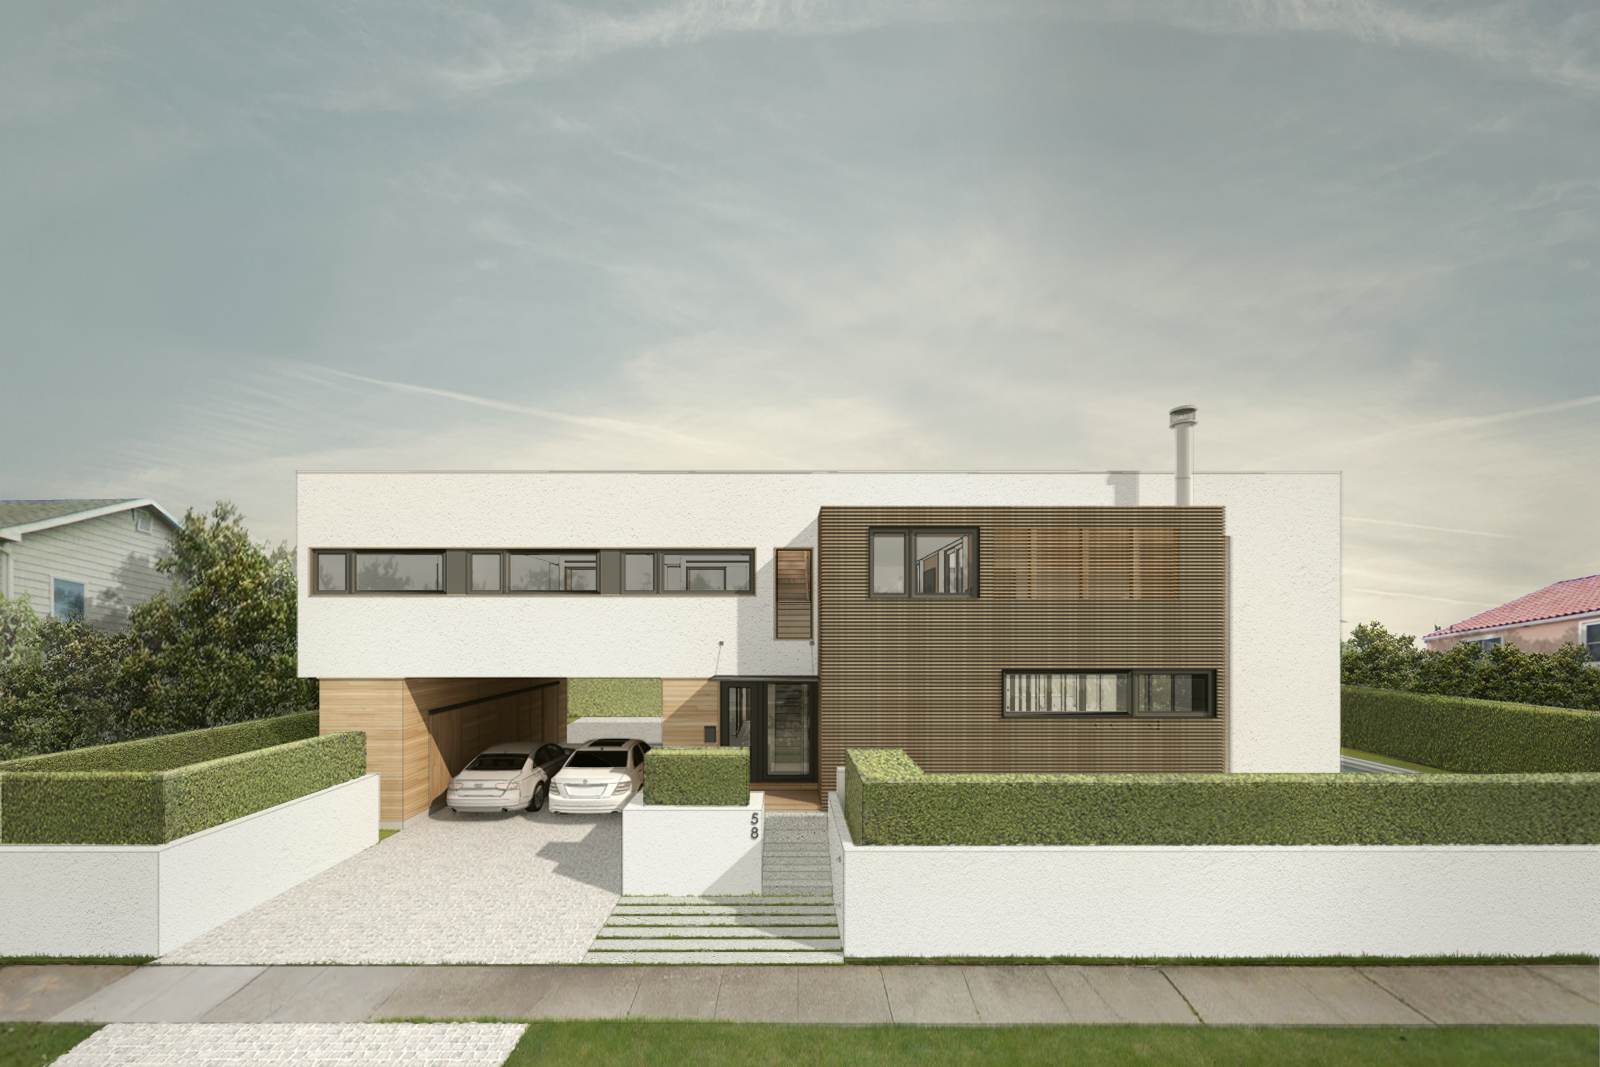 01-res4-resolution-4-architecture-modern-modular-prefab-long-beach-house-exterior-elevation-rendering.jpg